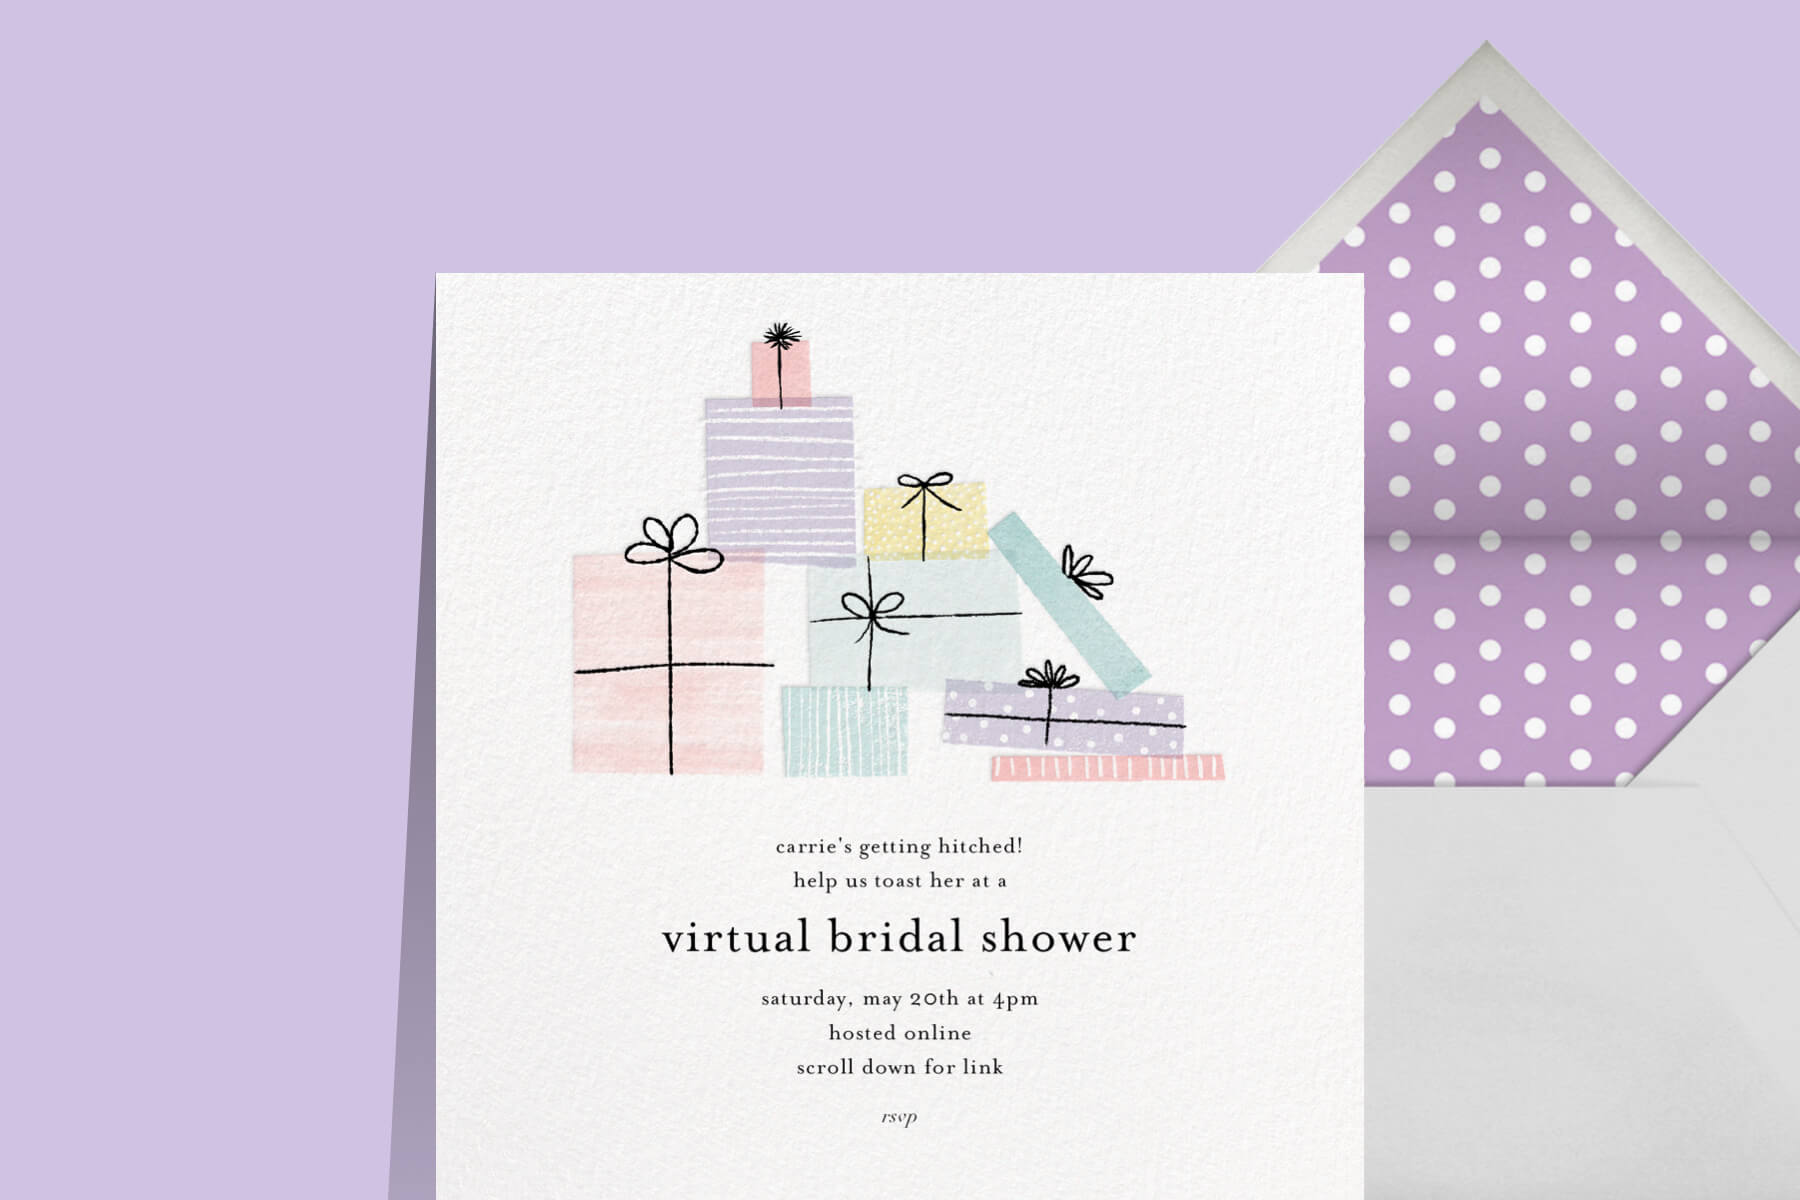 Virtual bridal shower invitation 